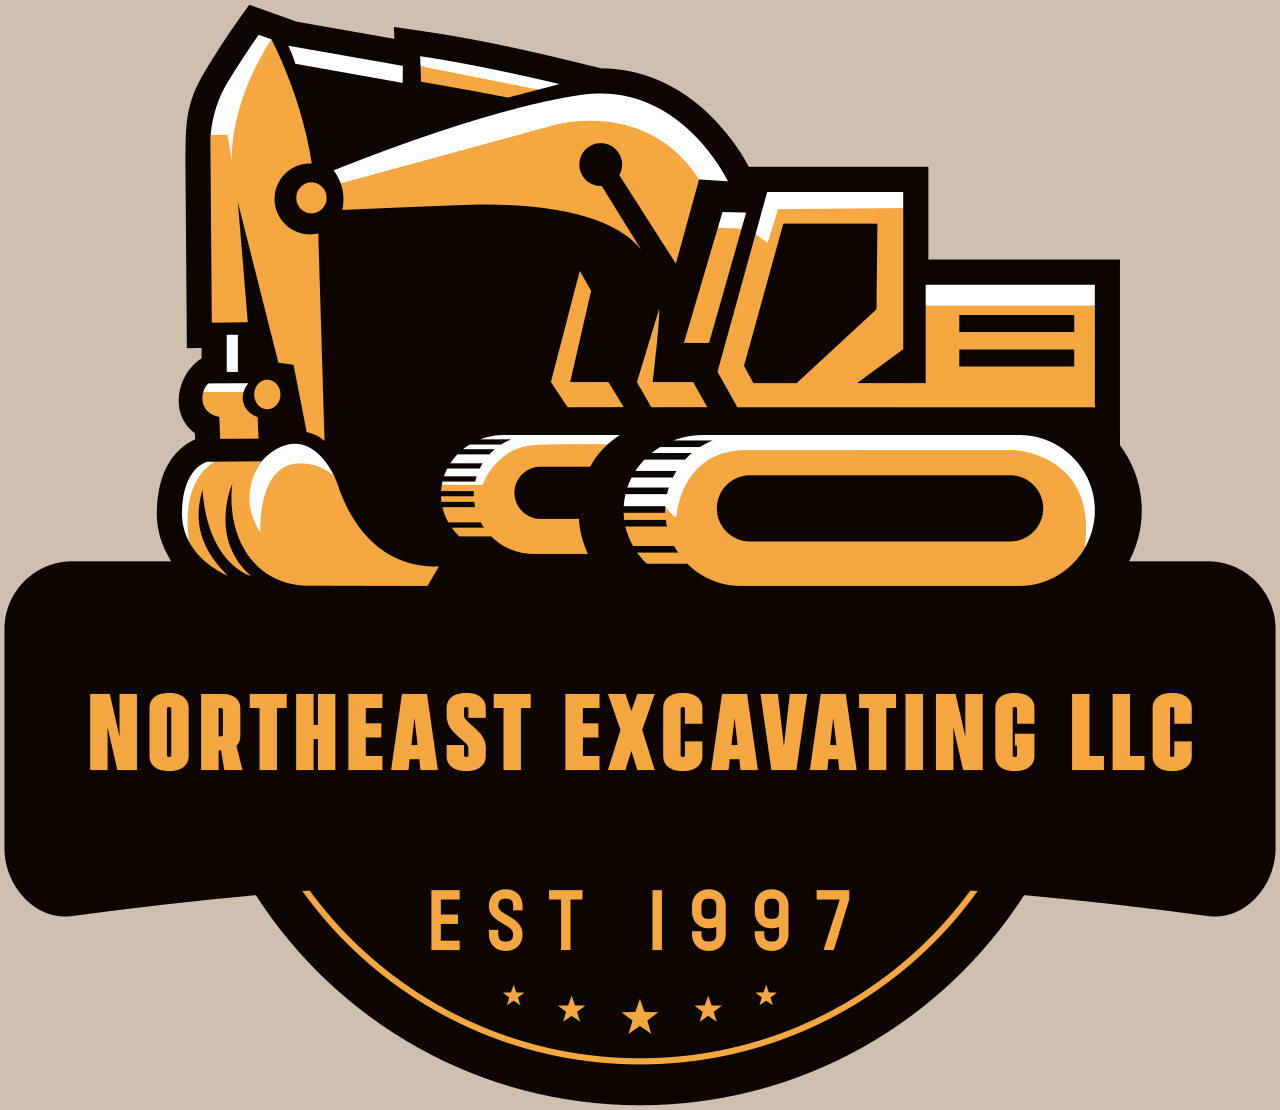 Northeast Excavating LLC's logo